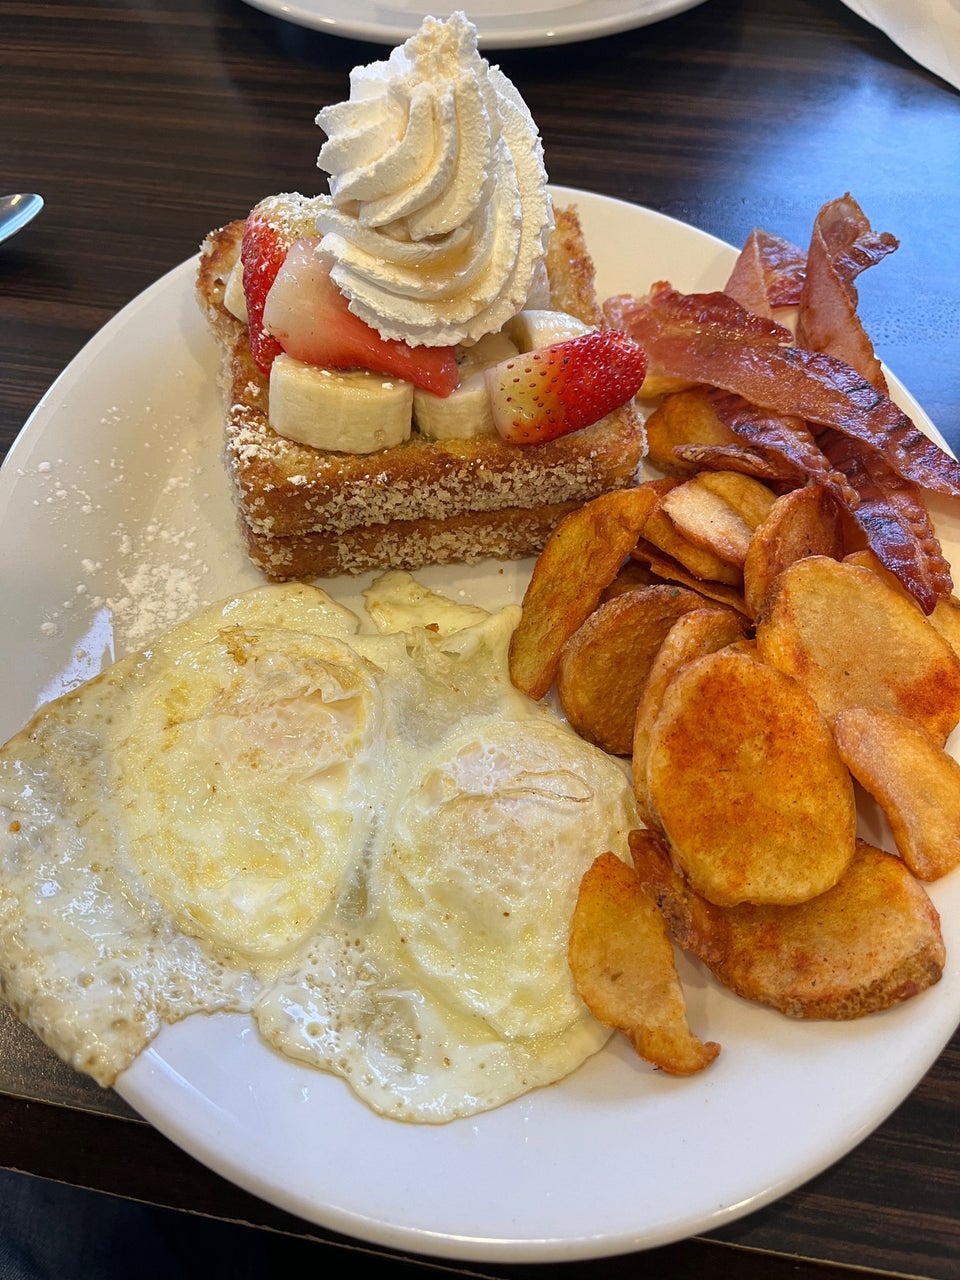 EggsOasis Breakfast & Lunch